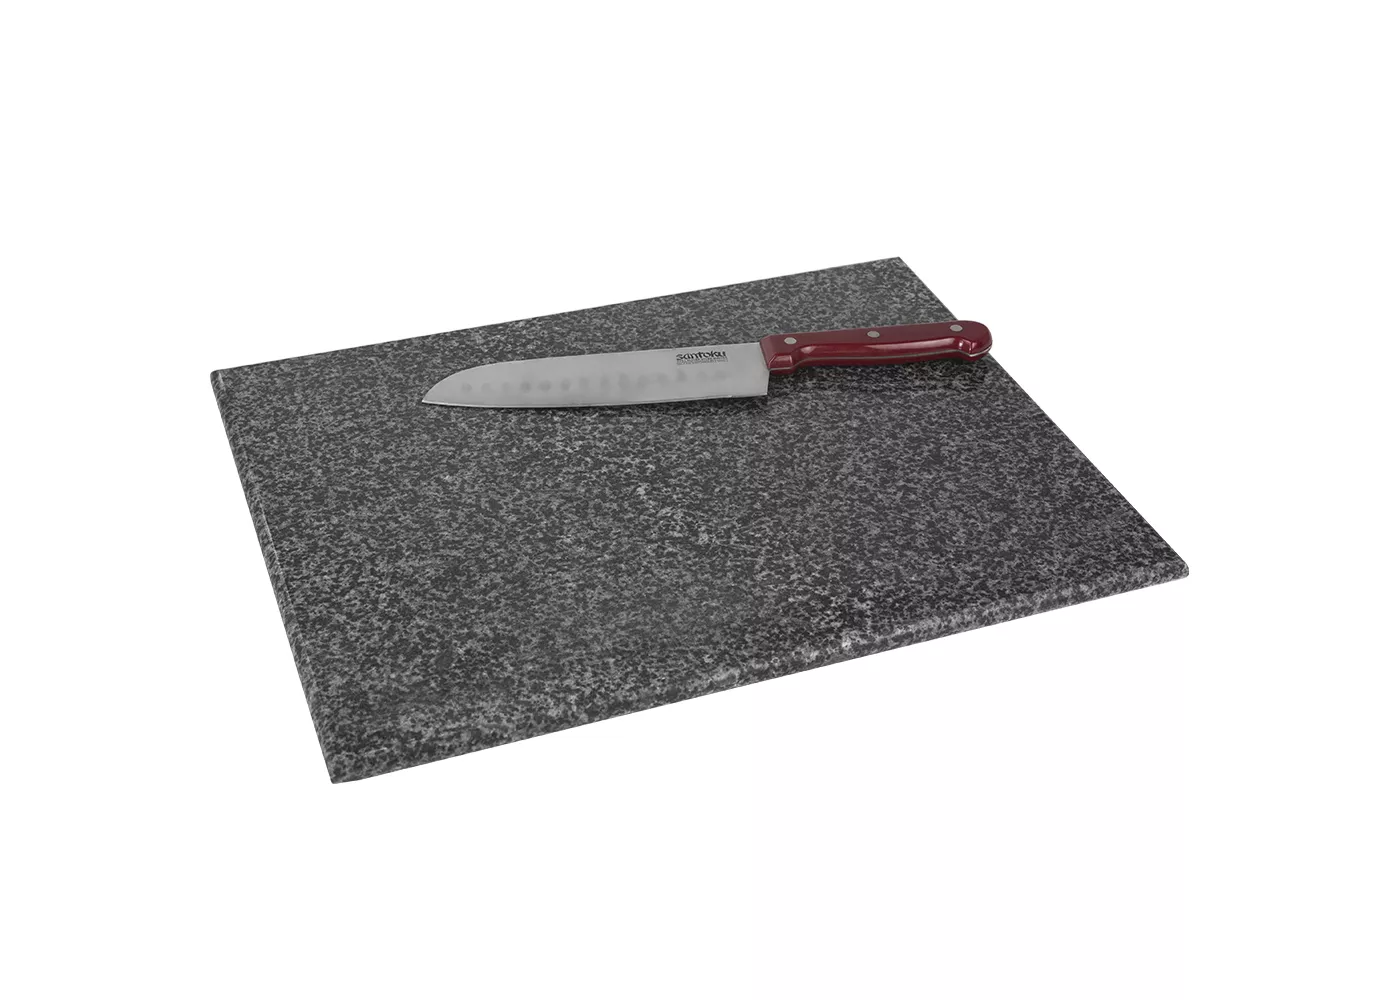 Home Basics Granite Cutting Board, Black - image 3 of 8